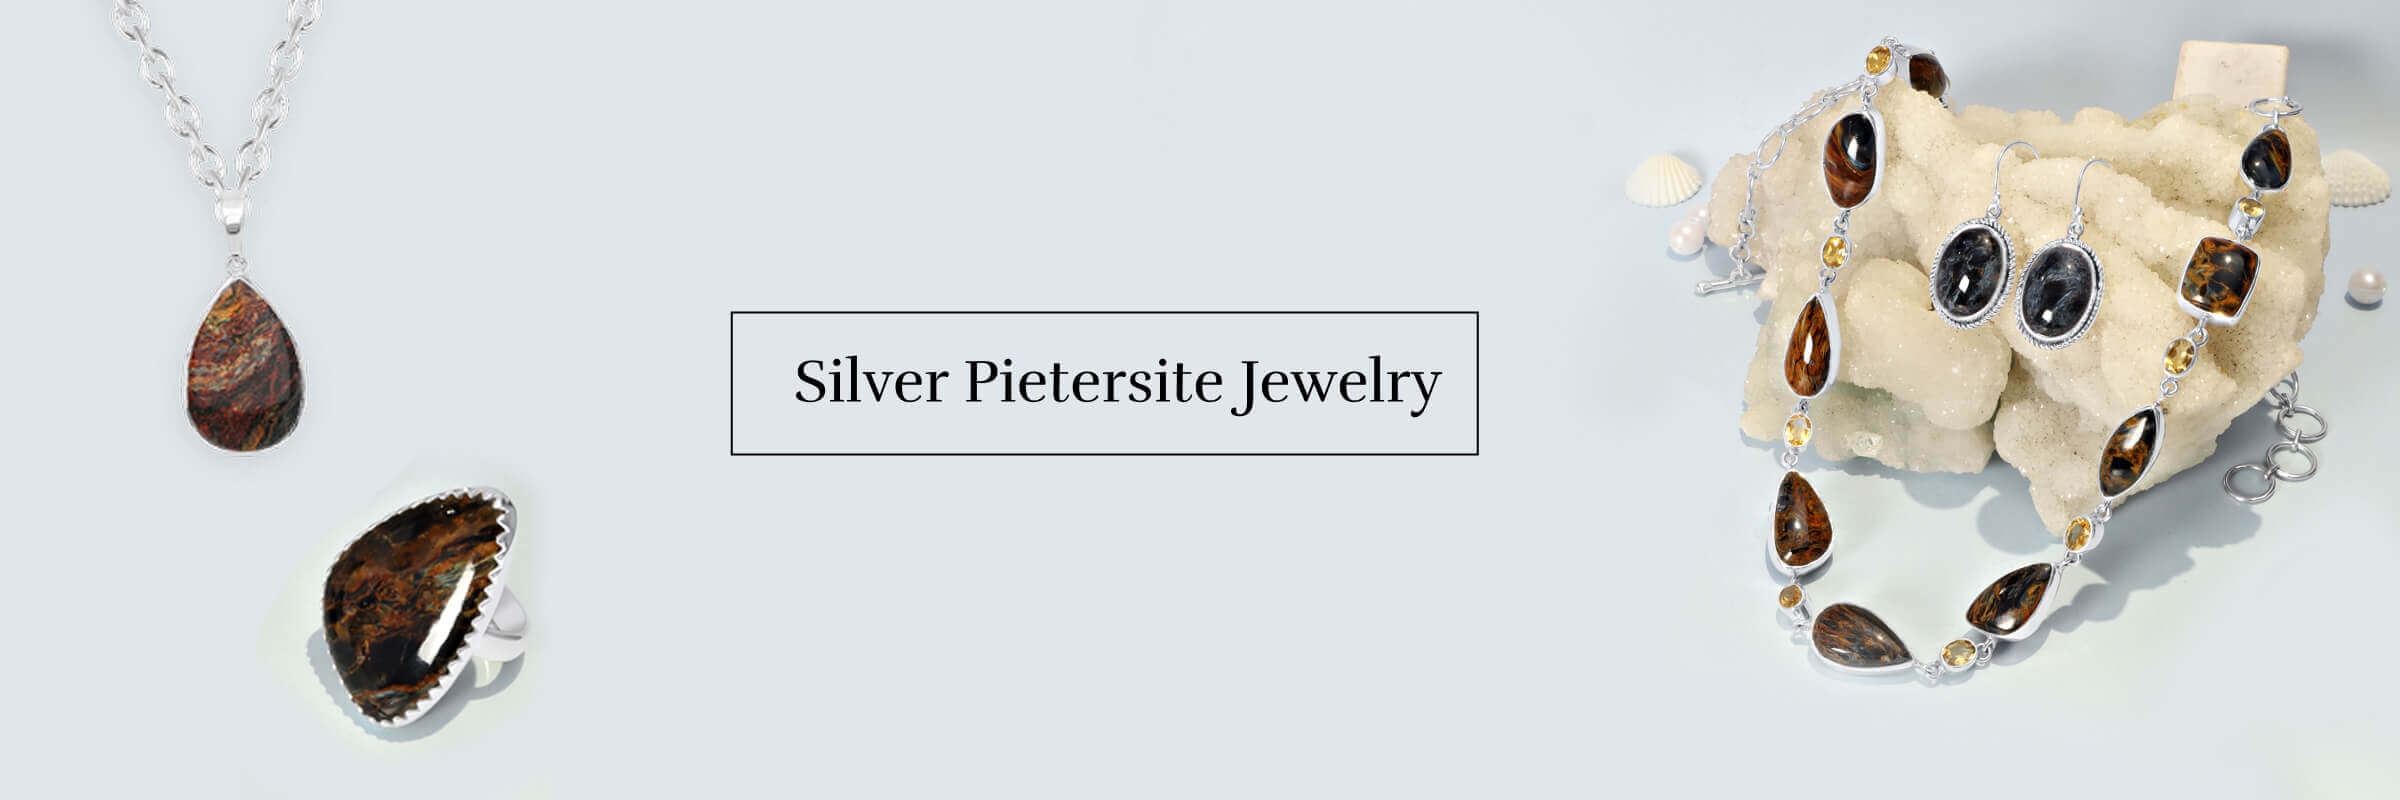 Pietersite Jewelry